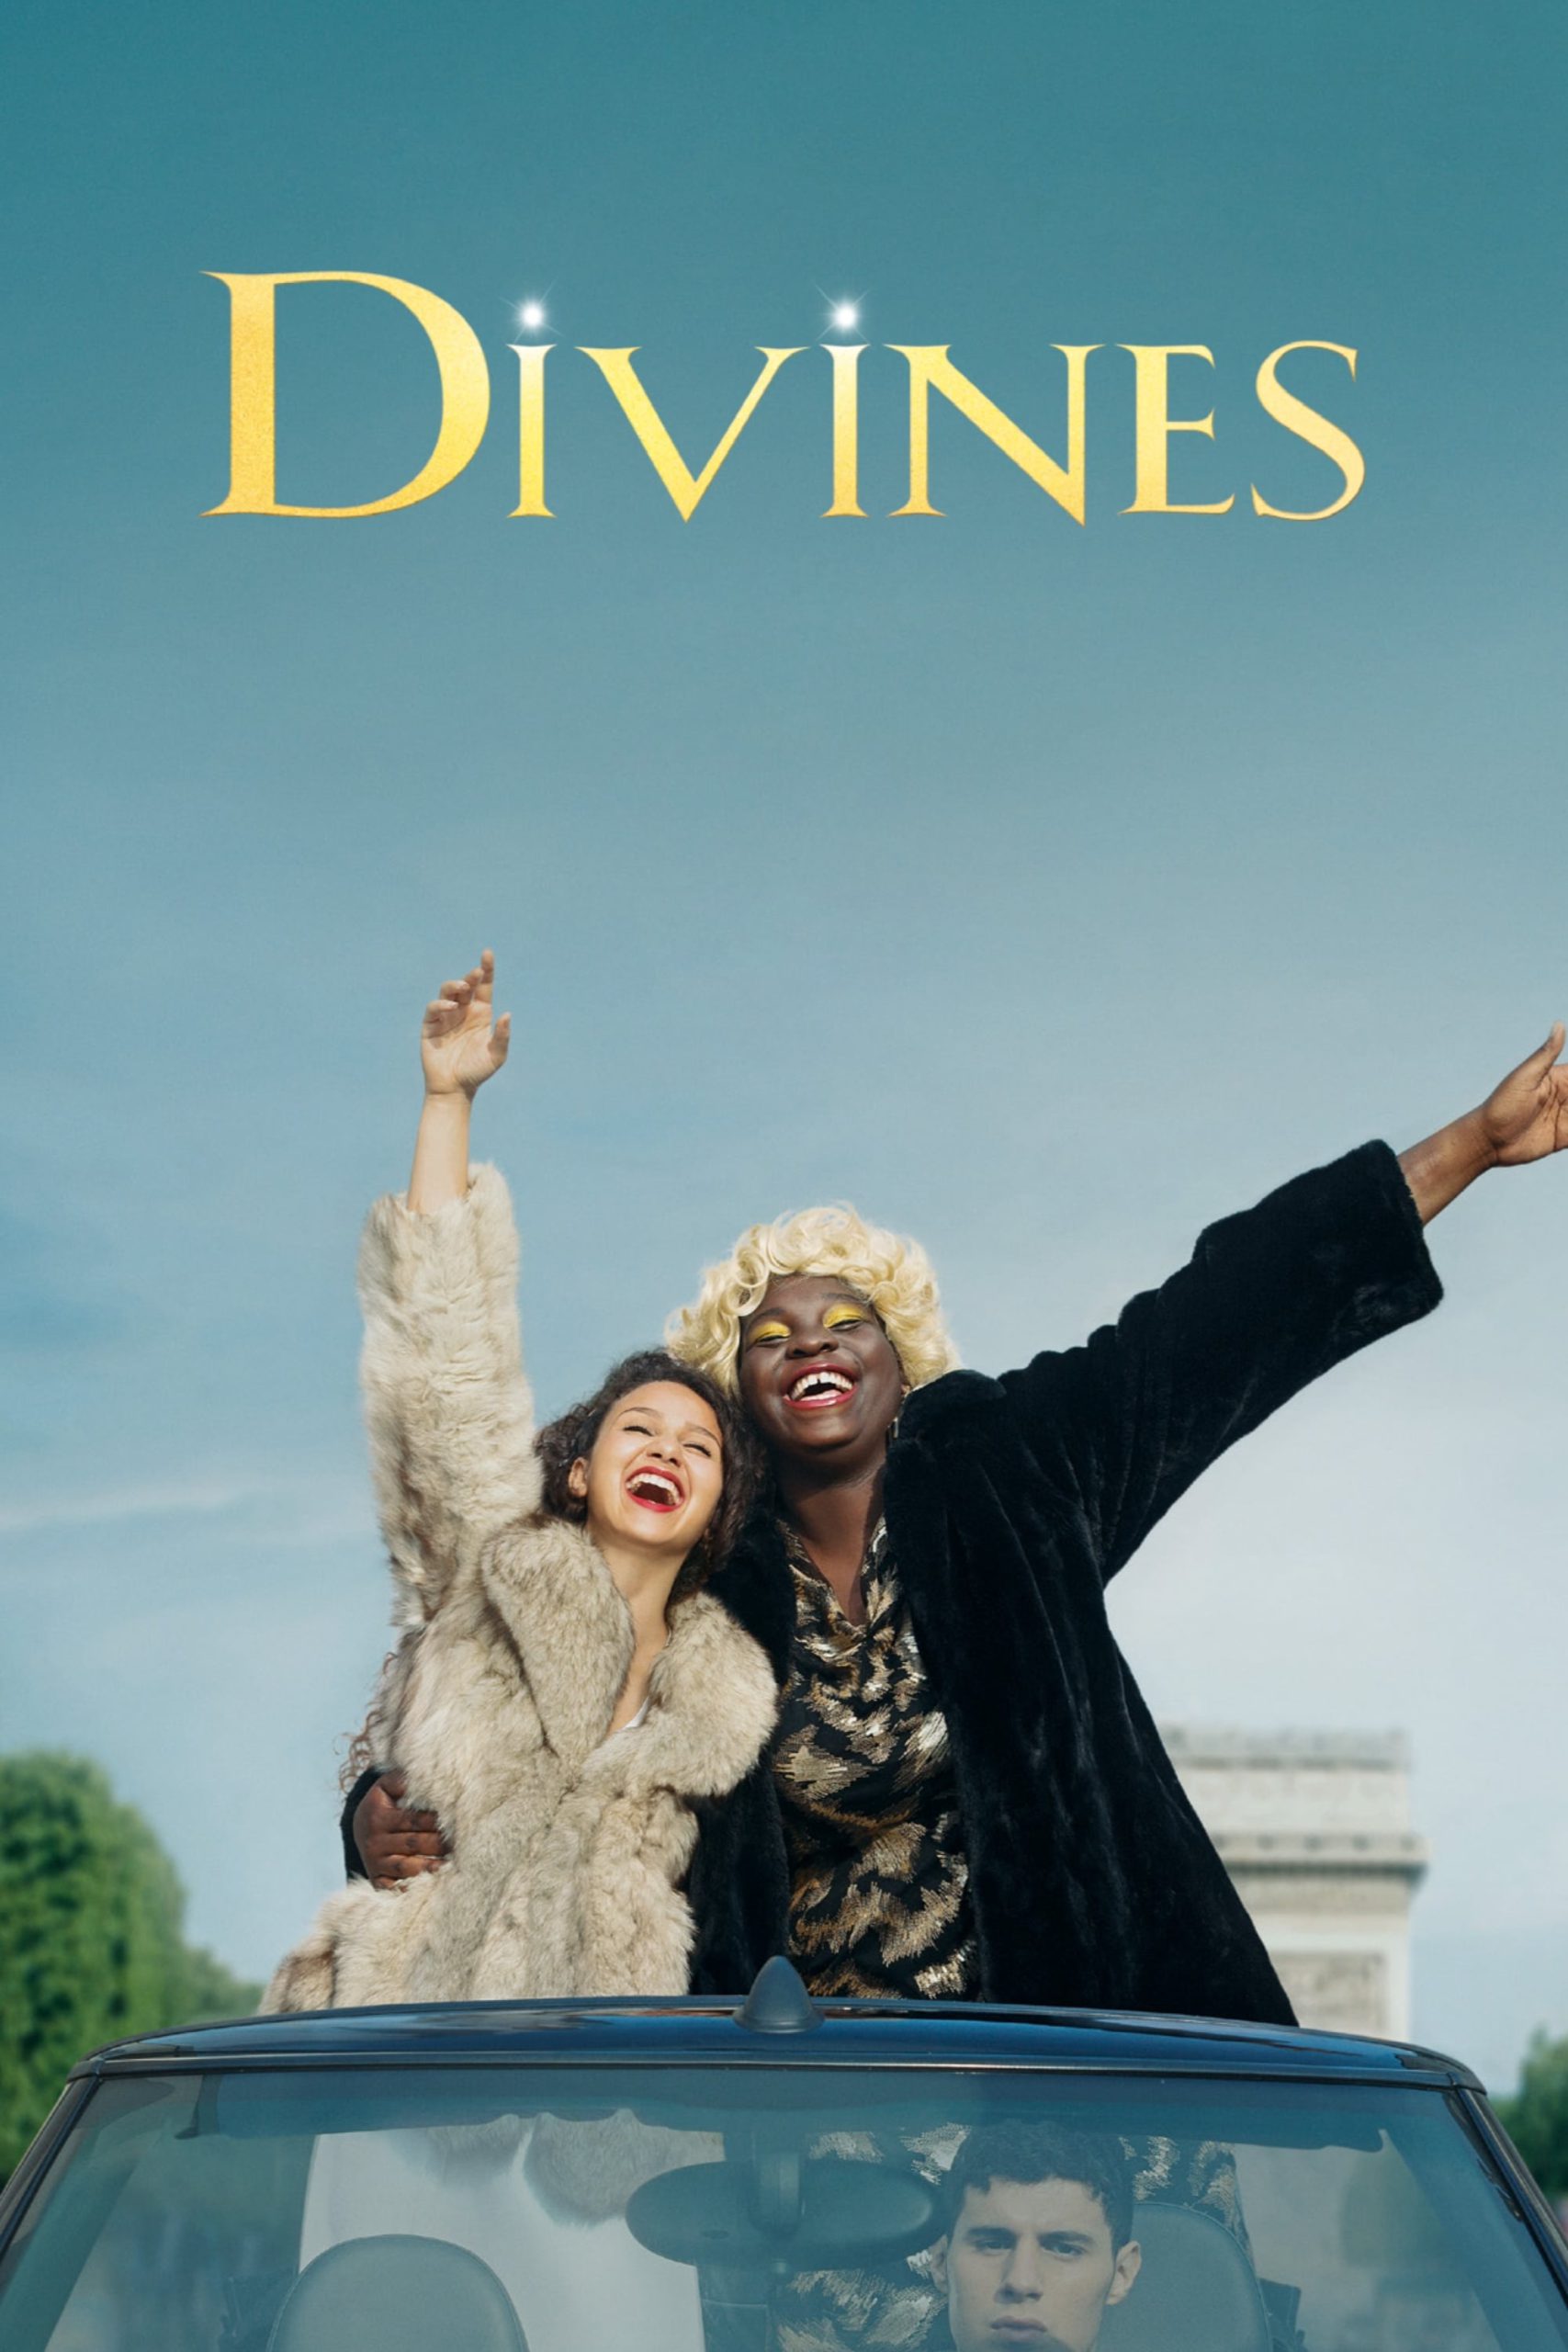 Divines [HD] (2016)